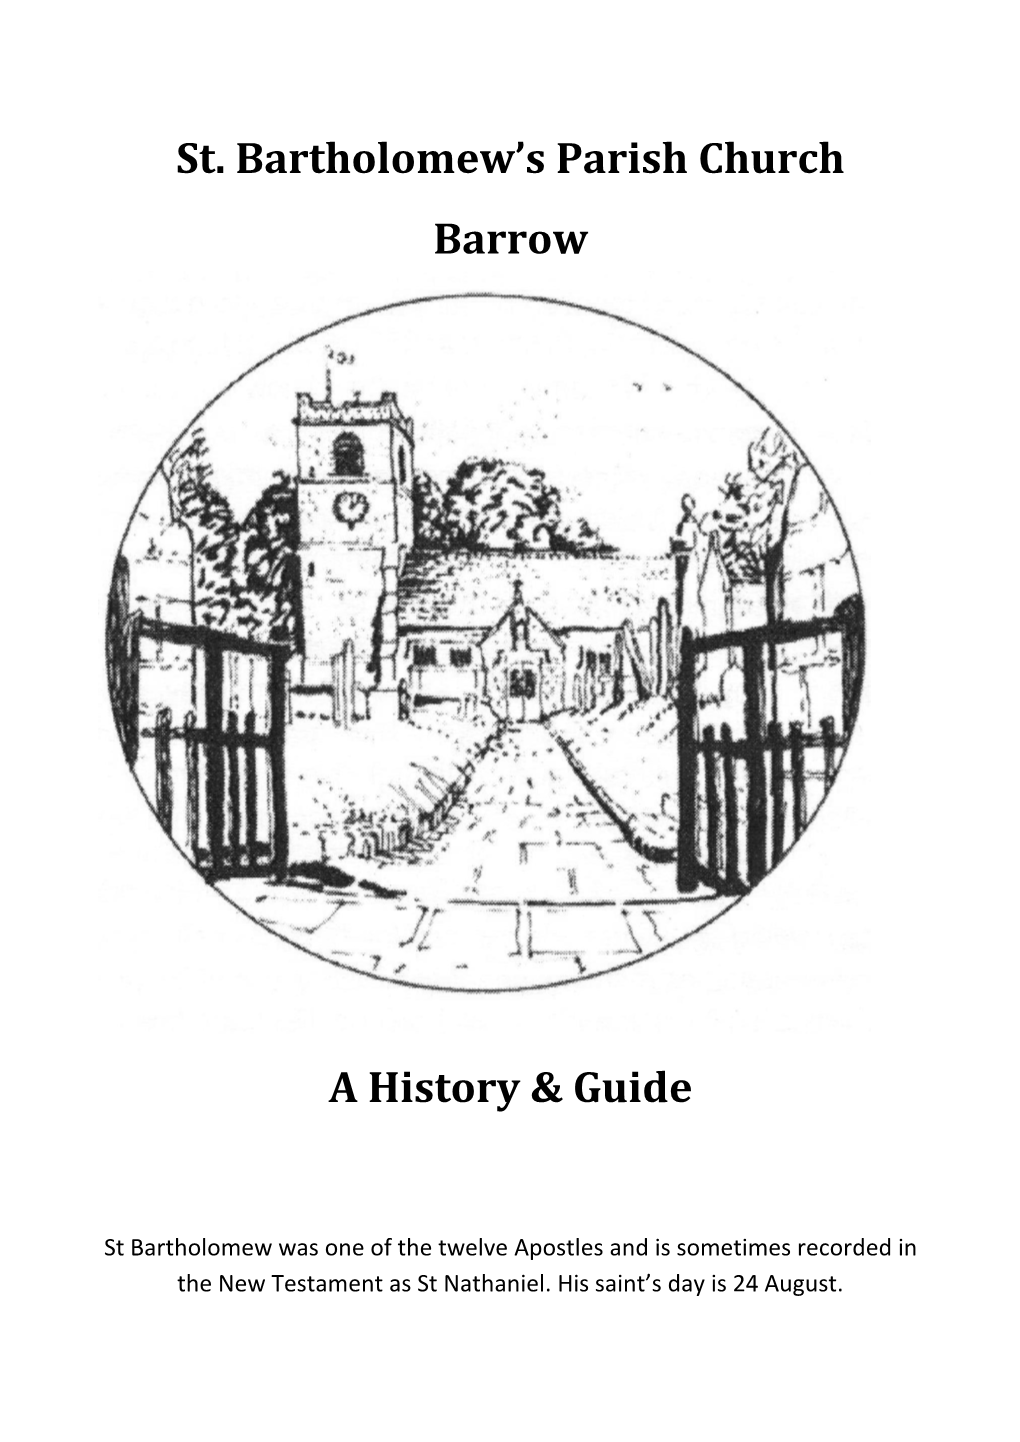 St. Bartholomew's Parish Church Barrow a History & Guide